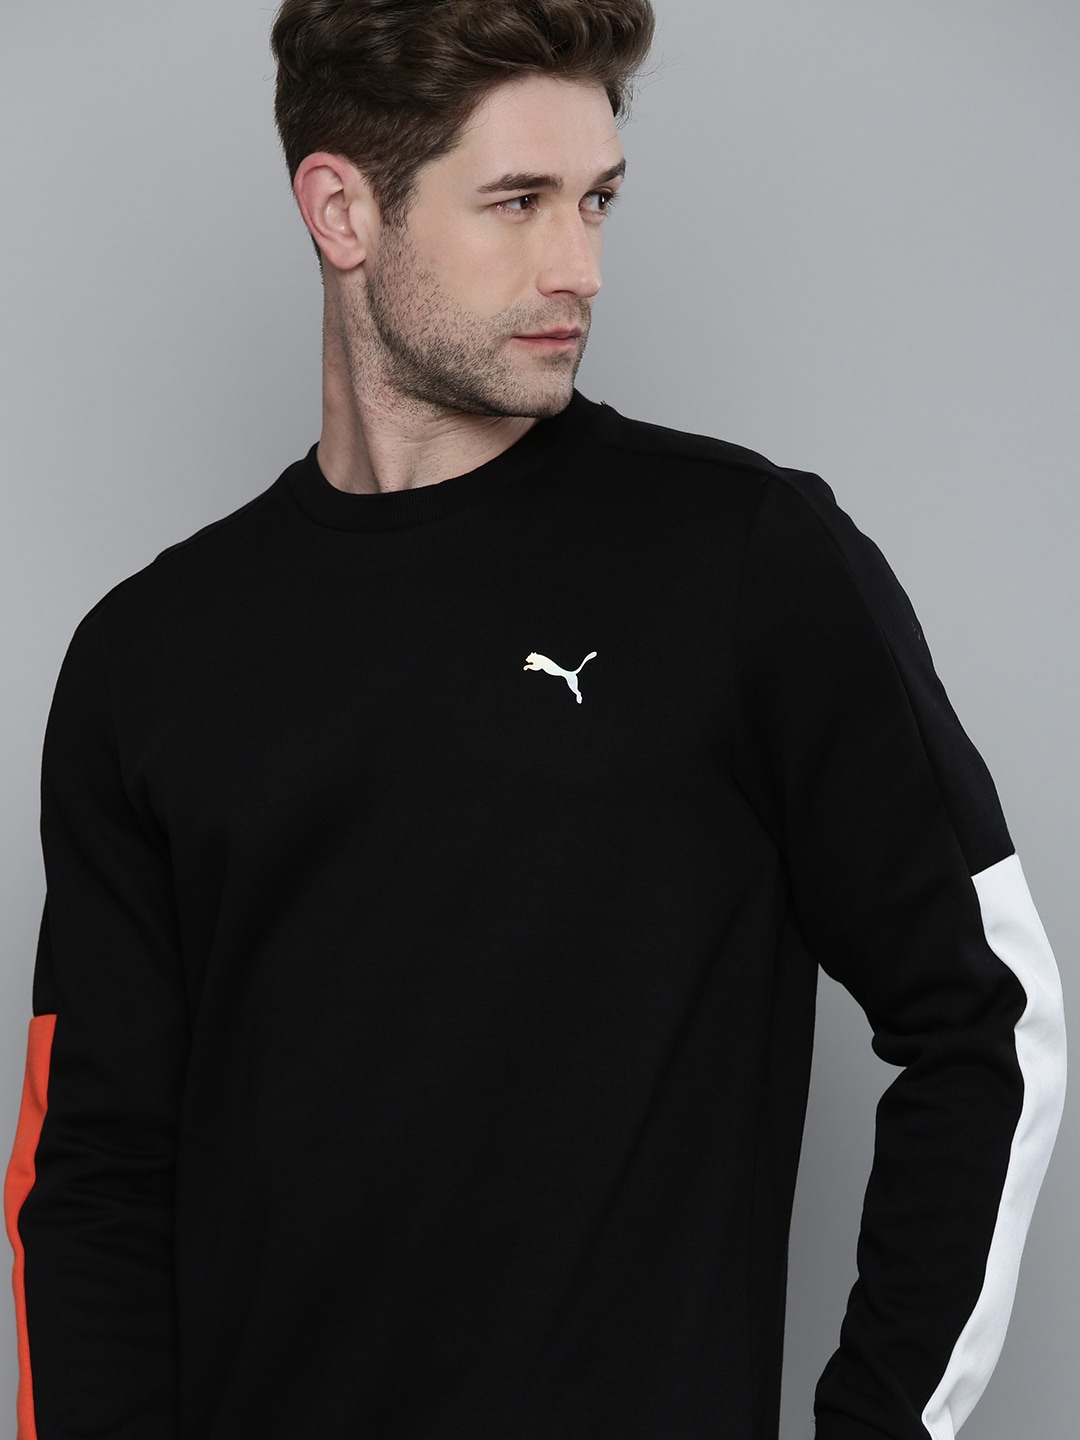 Polyester Reflective logo Puma One 8 T Shirt, Round Neck